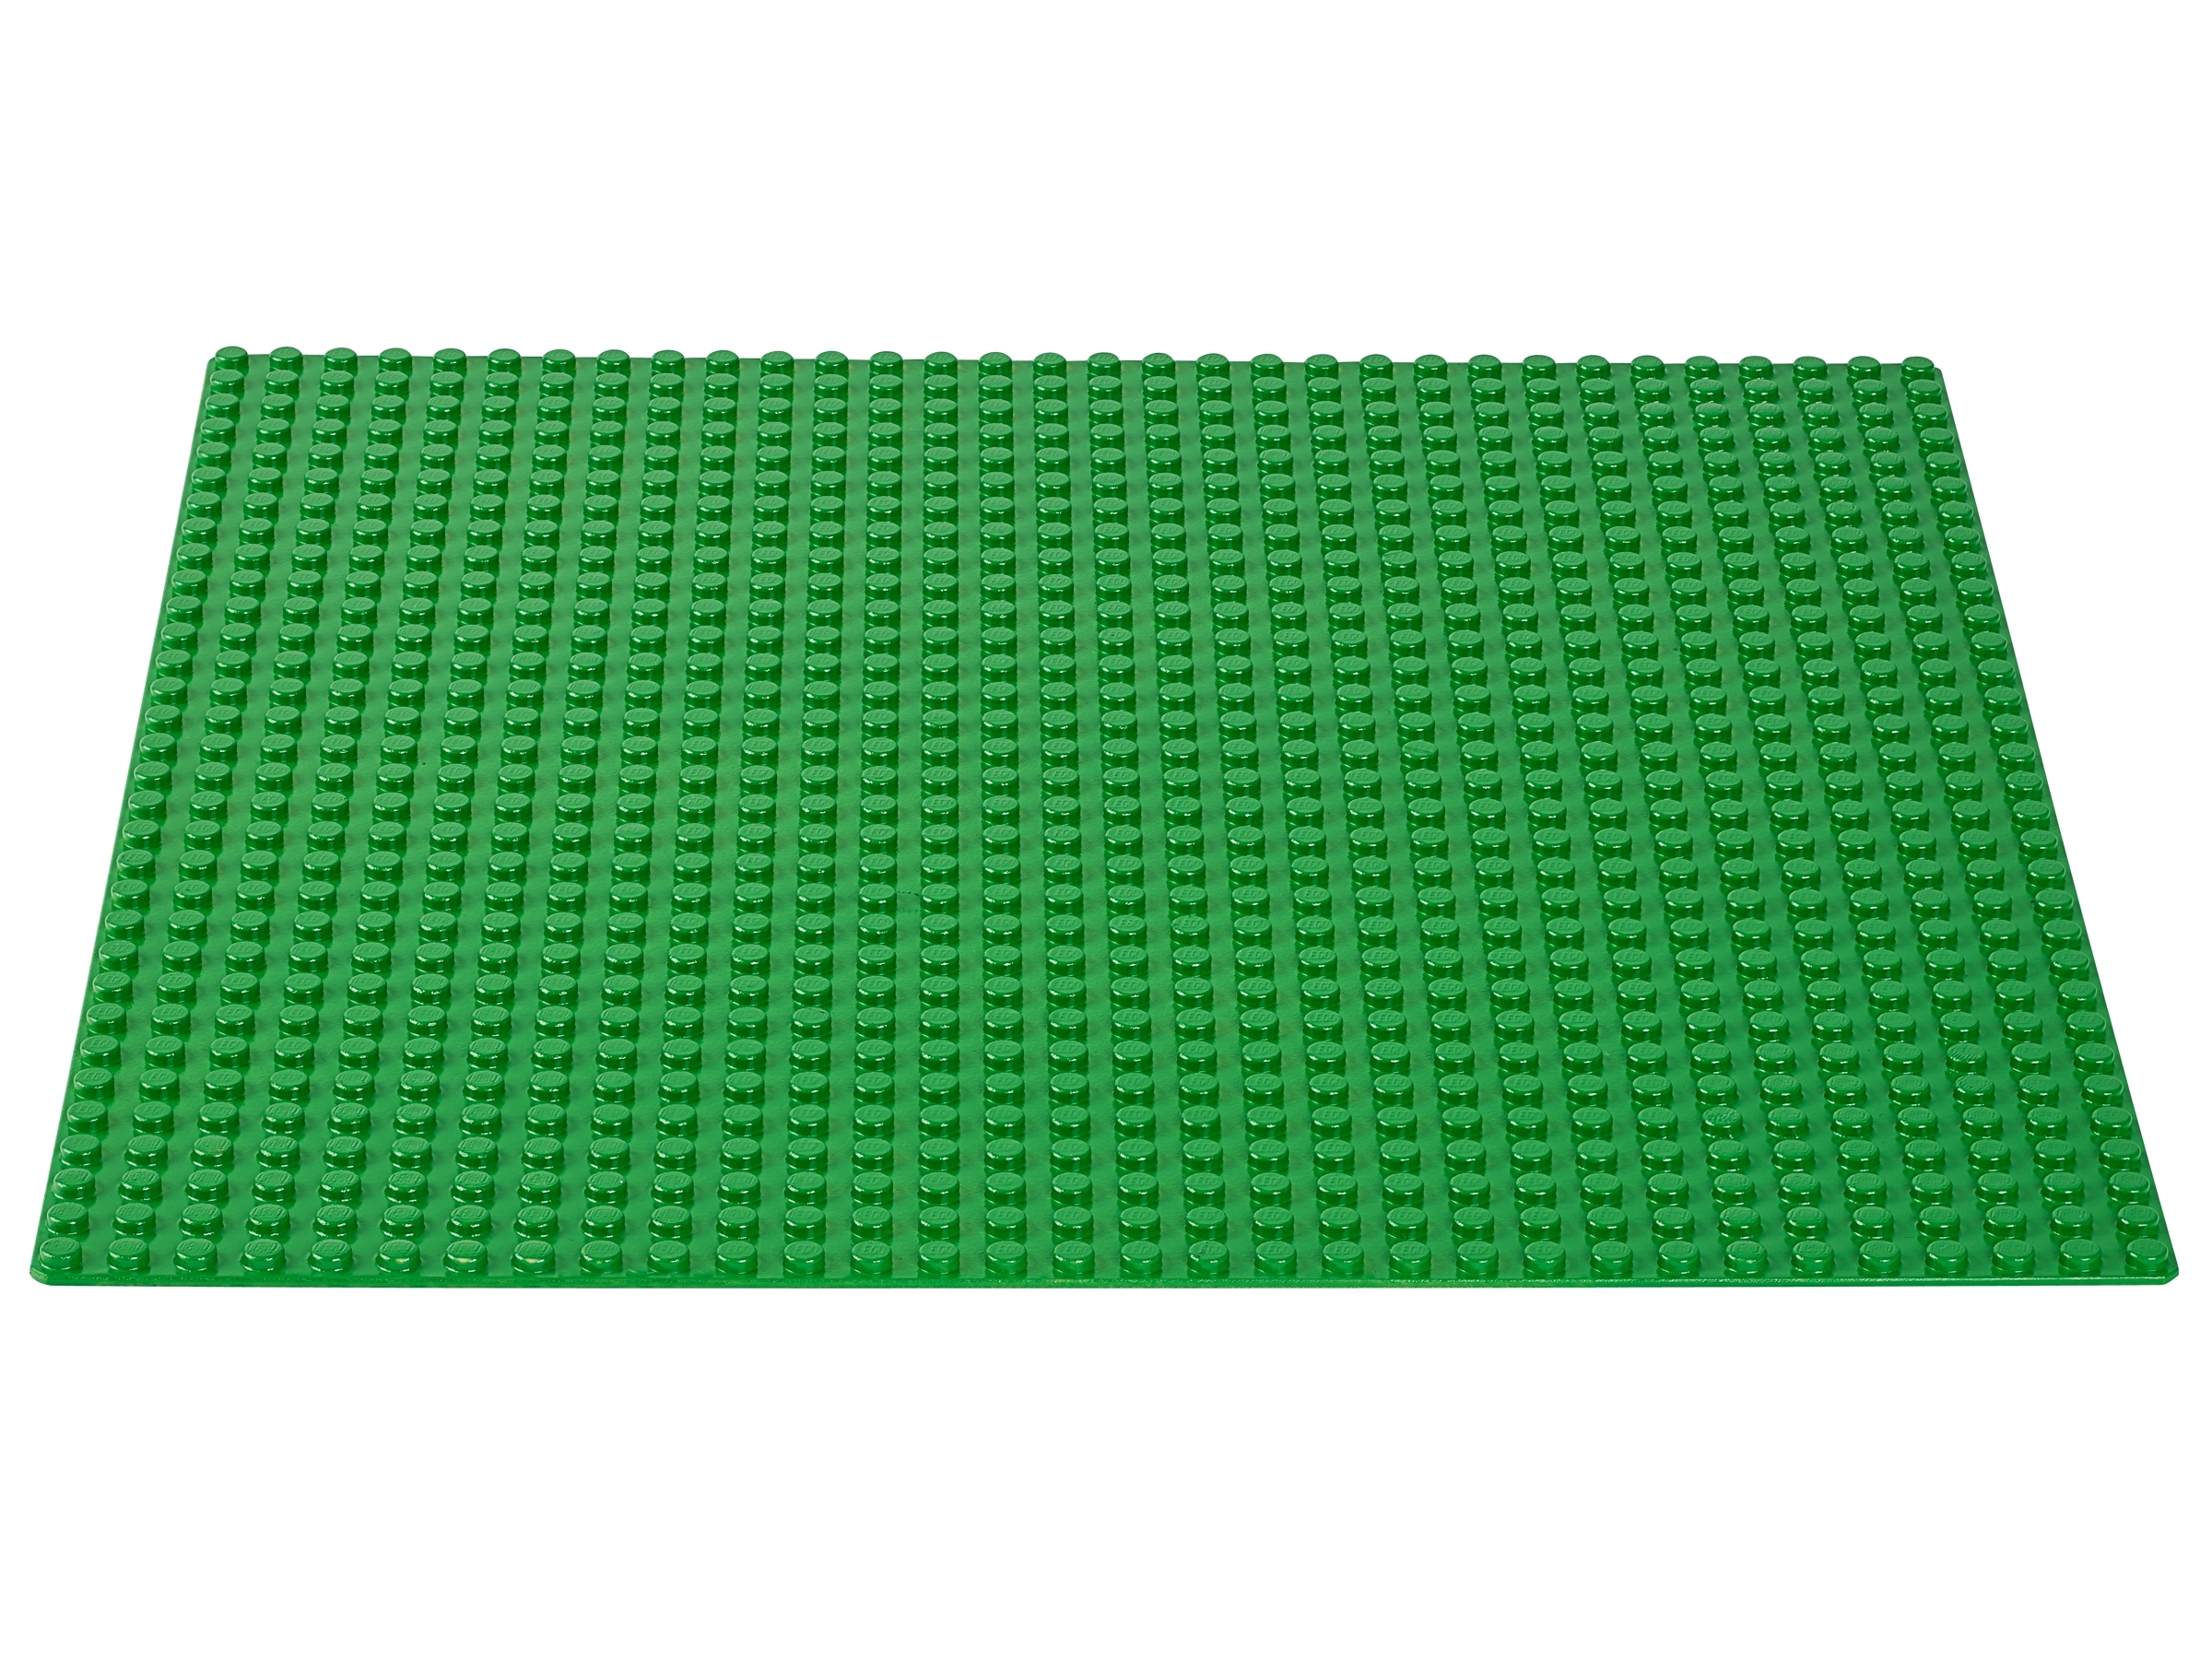 HUGE Lego Base Plate Lot of 15 thin gray 8x16 8 dot x 16 dot baseplates 16x8 